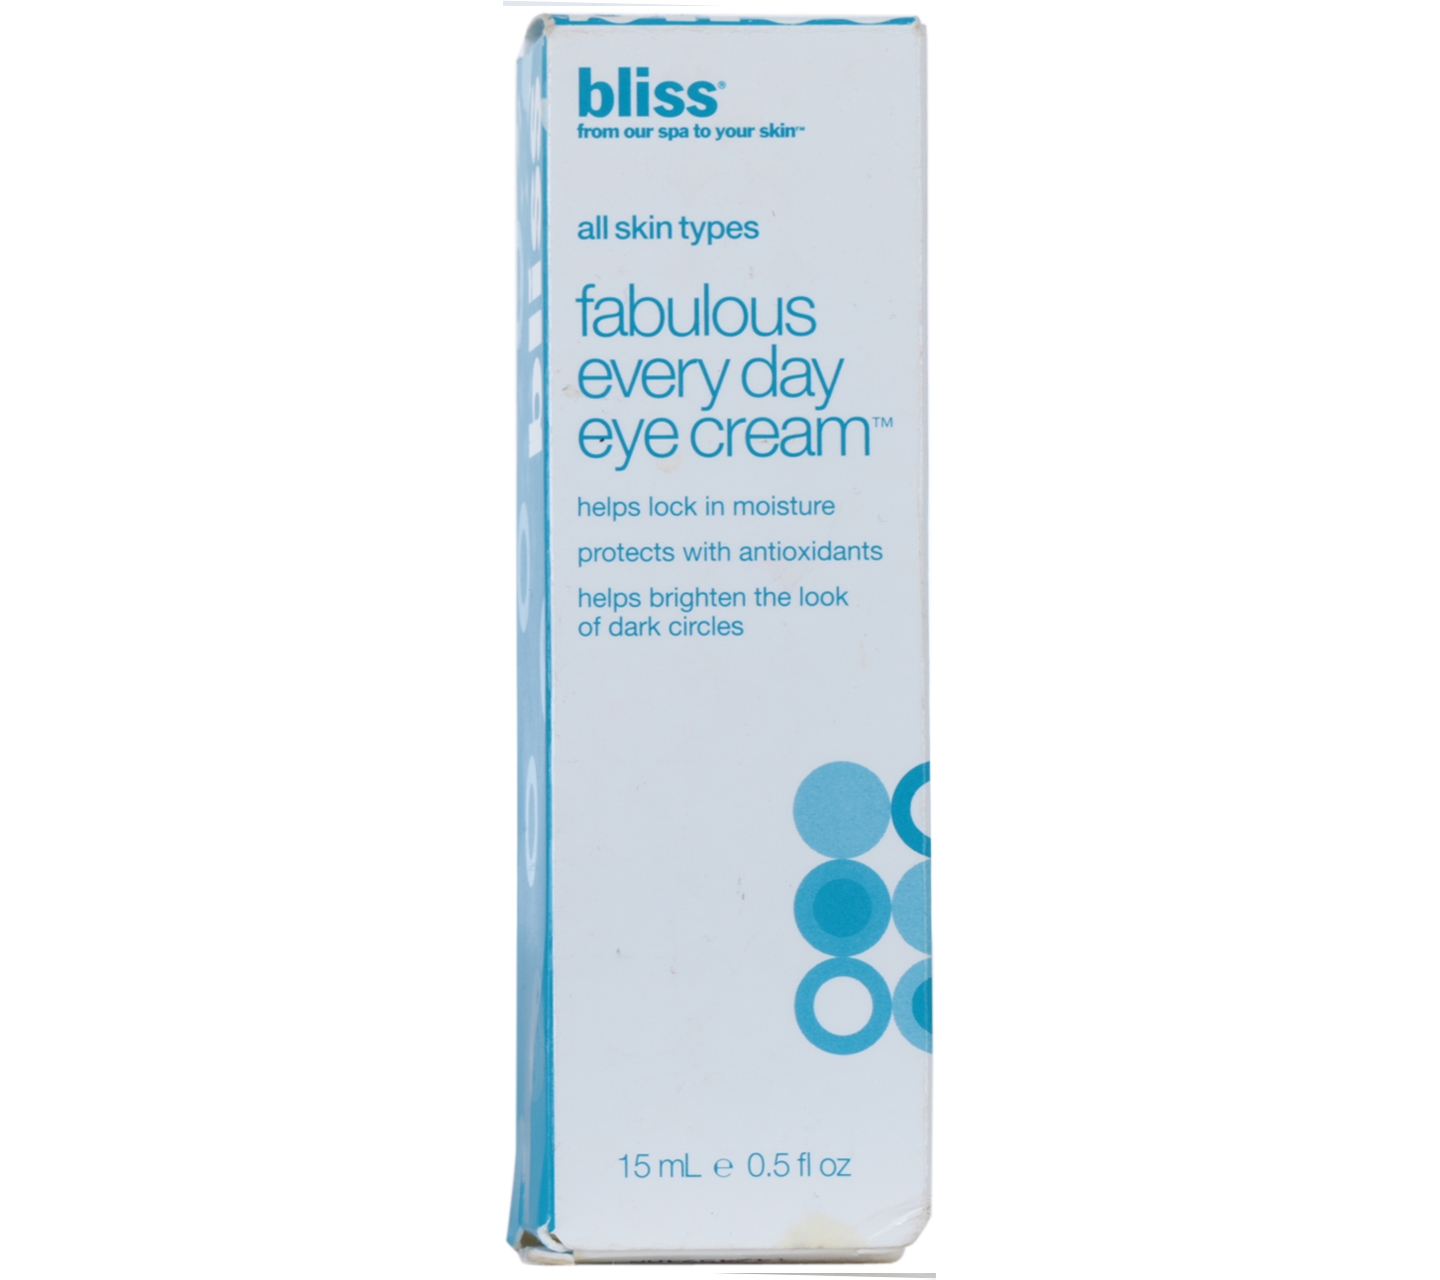 Bliss White Fabulous Every Day Eye Cream Skin Care